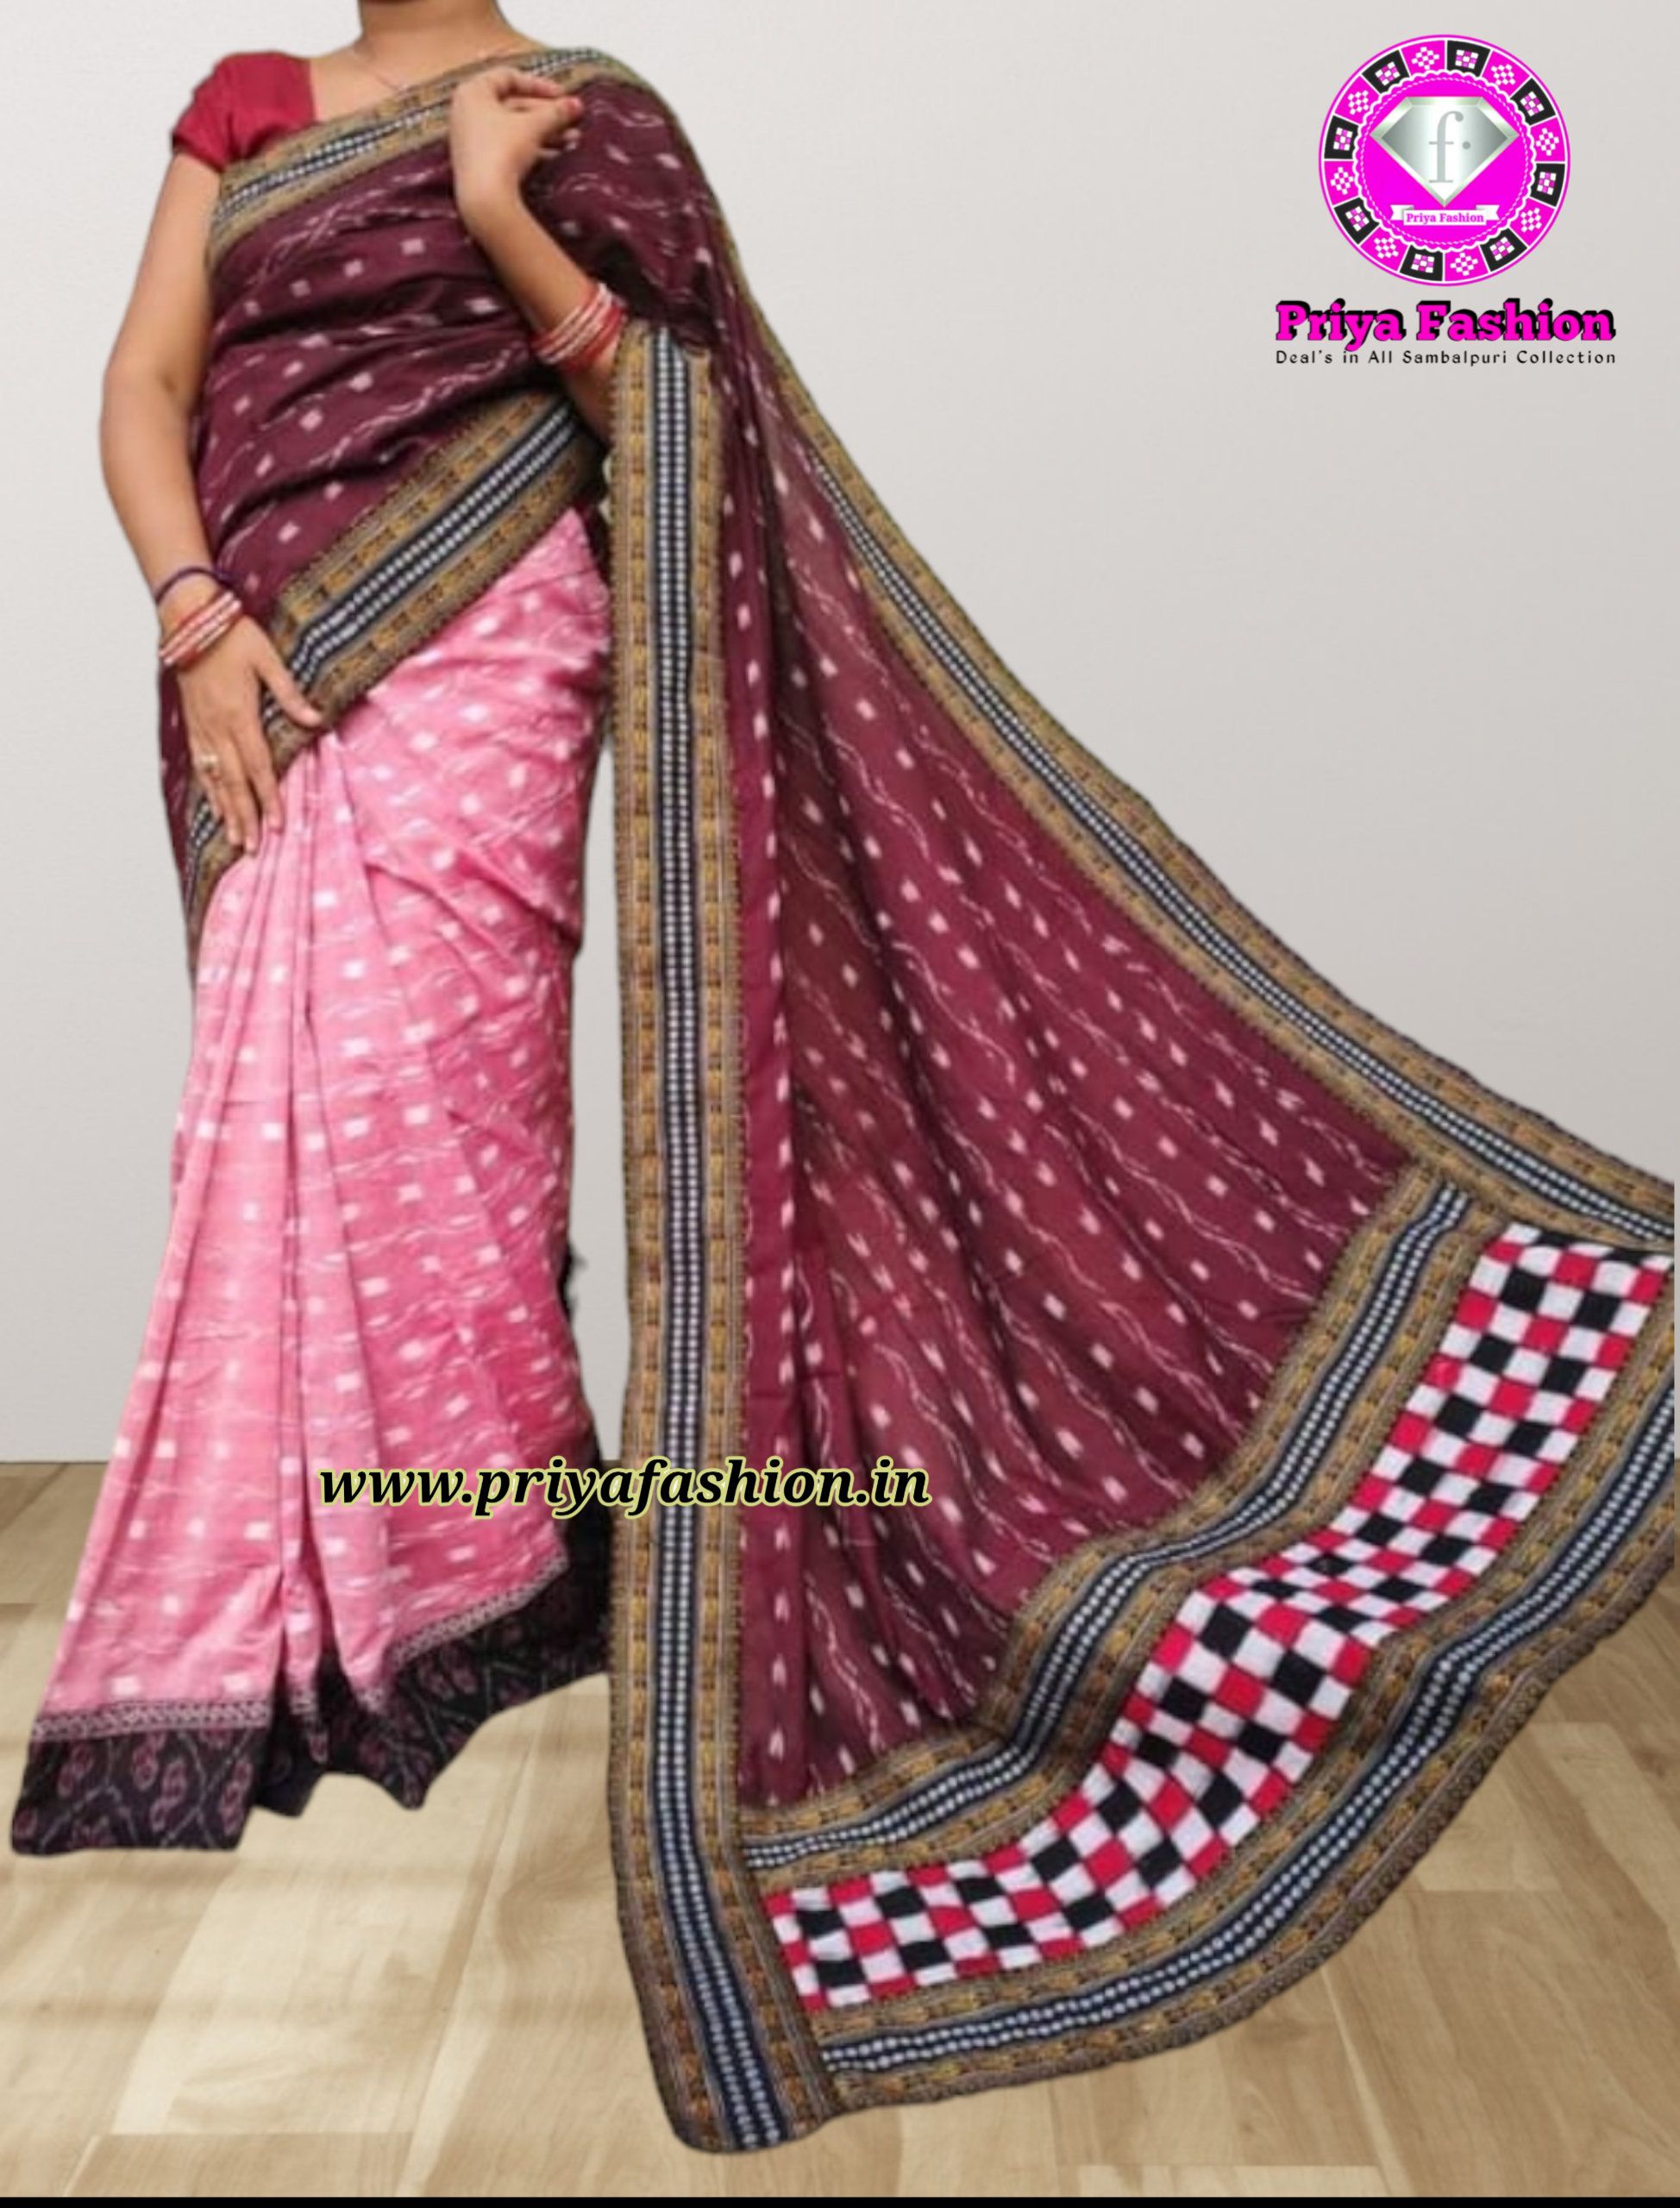 Sambalpuri Saree Draping In 5 Stylish Ways | Style Your Saree With Fashion  | Rajasmita Kar￼ - YouTube